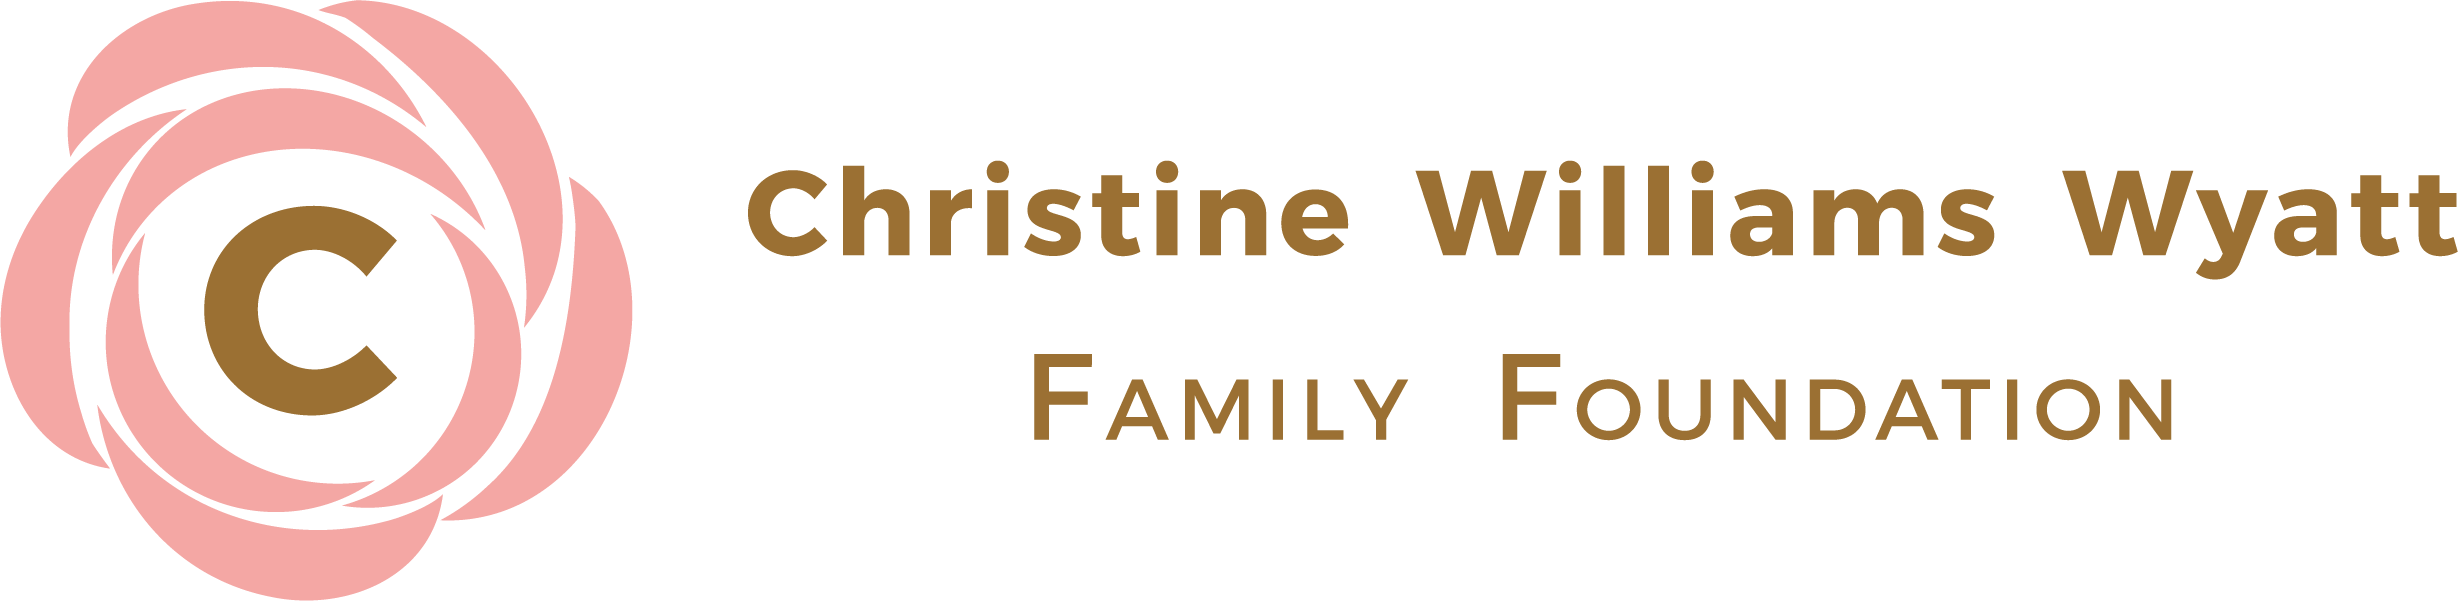 Christine Williams Wyatt Family Foundation Logo